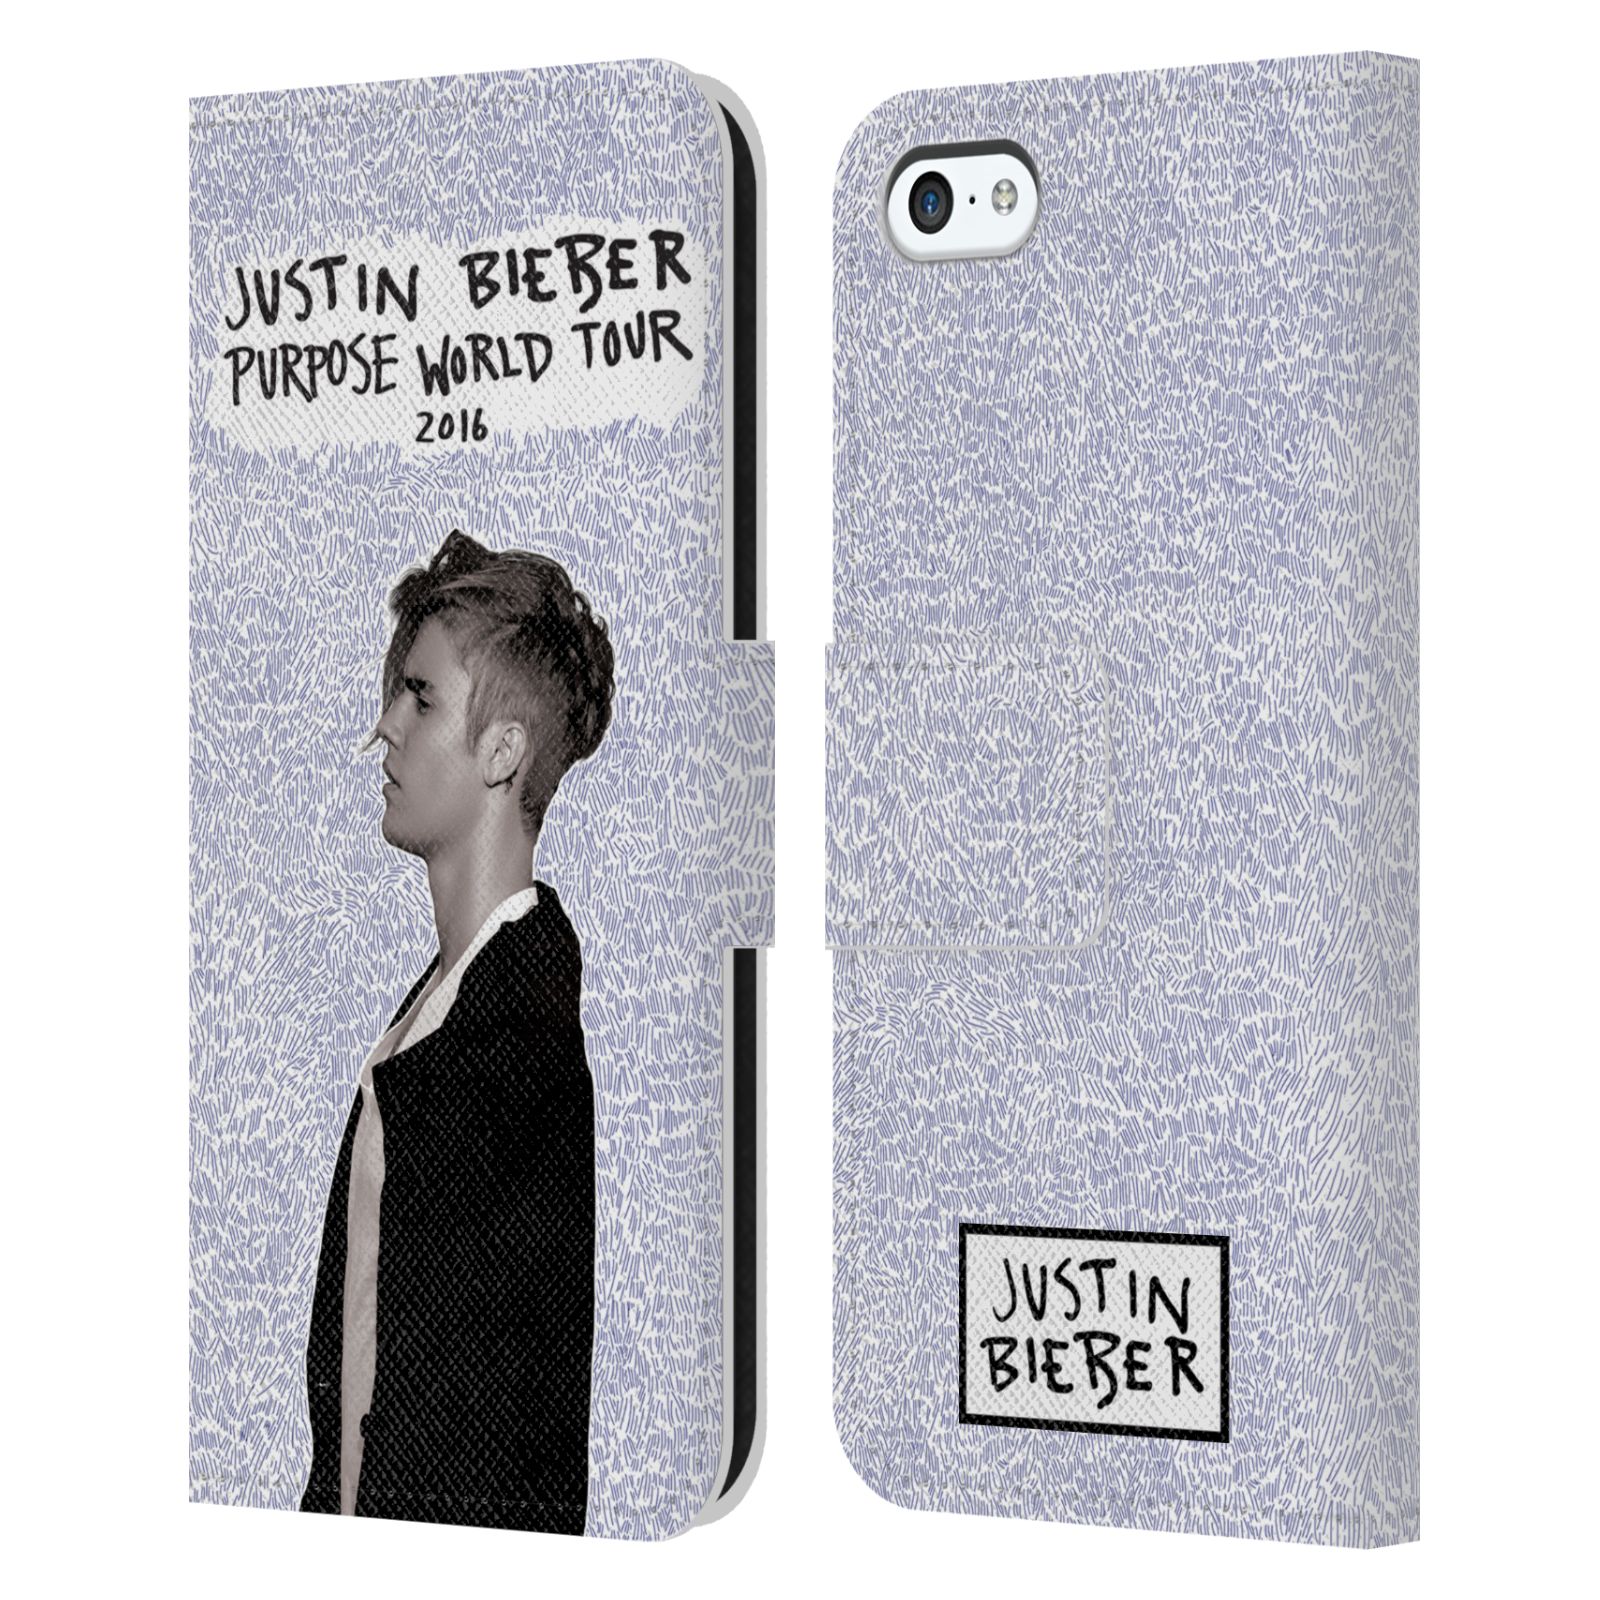 HEAD CASE Flipové pouzdro pro mobil Apple Iphone 5C originální potisk Justin Bieber Purpose world tour